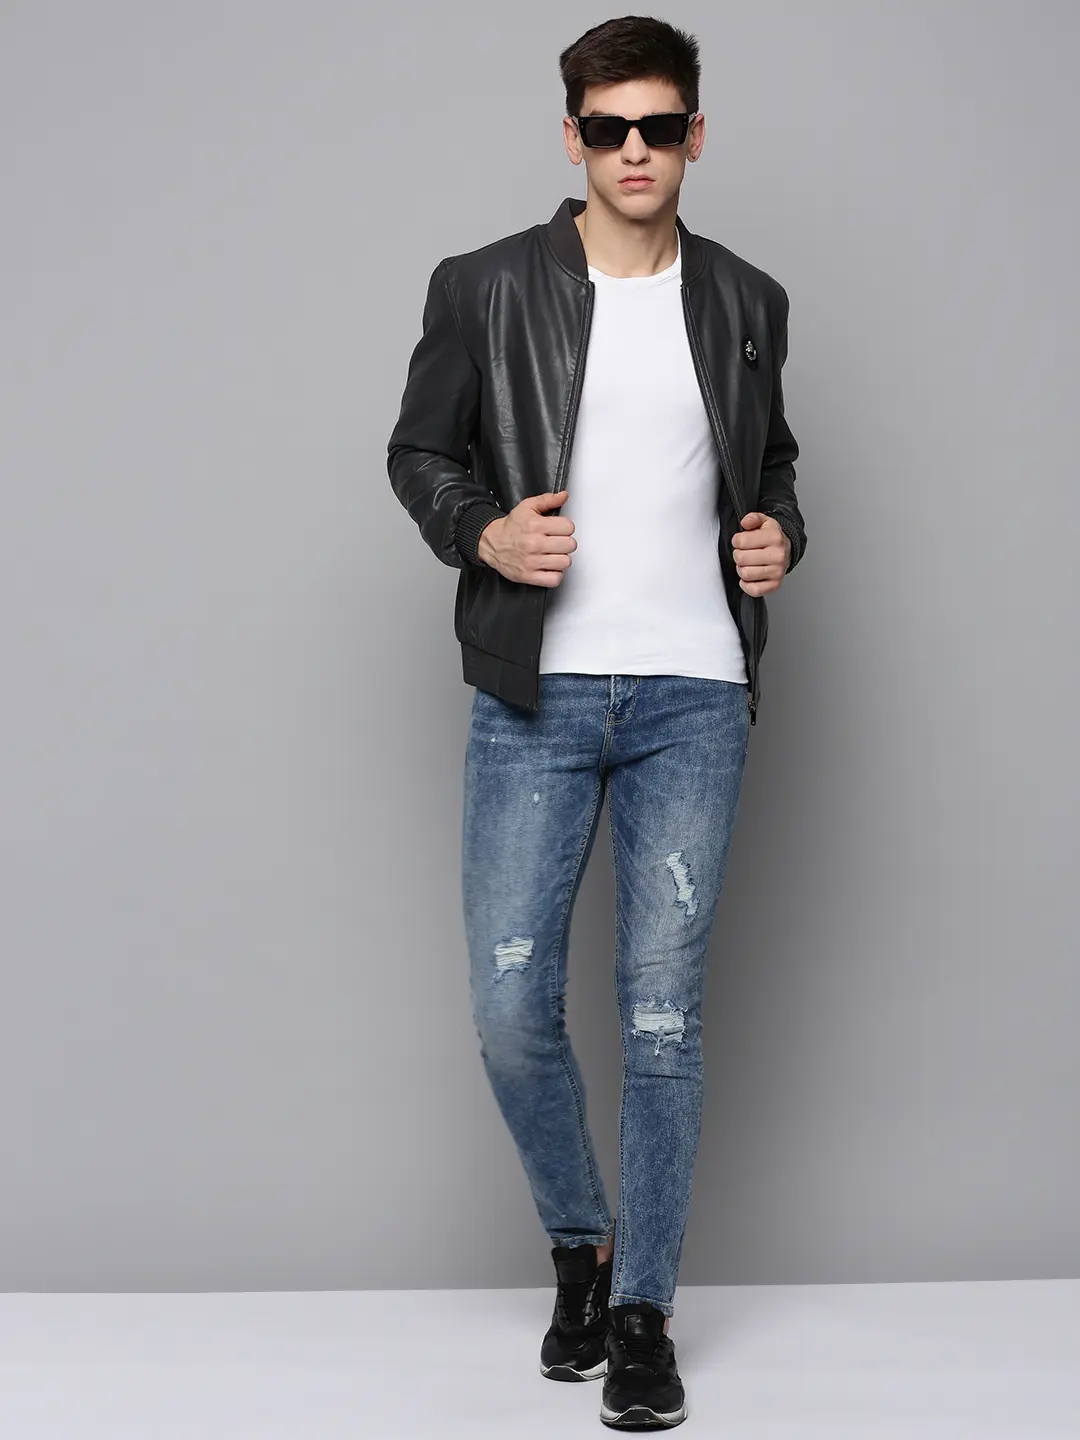 SHOWOFF Men's Mandarin Collar Grey Solid Leather Jacket